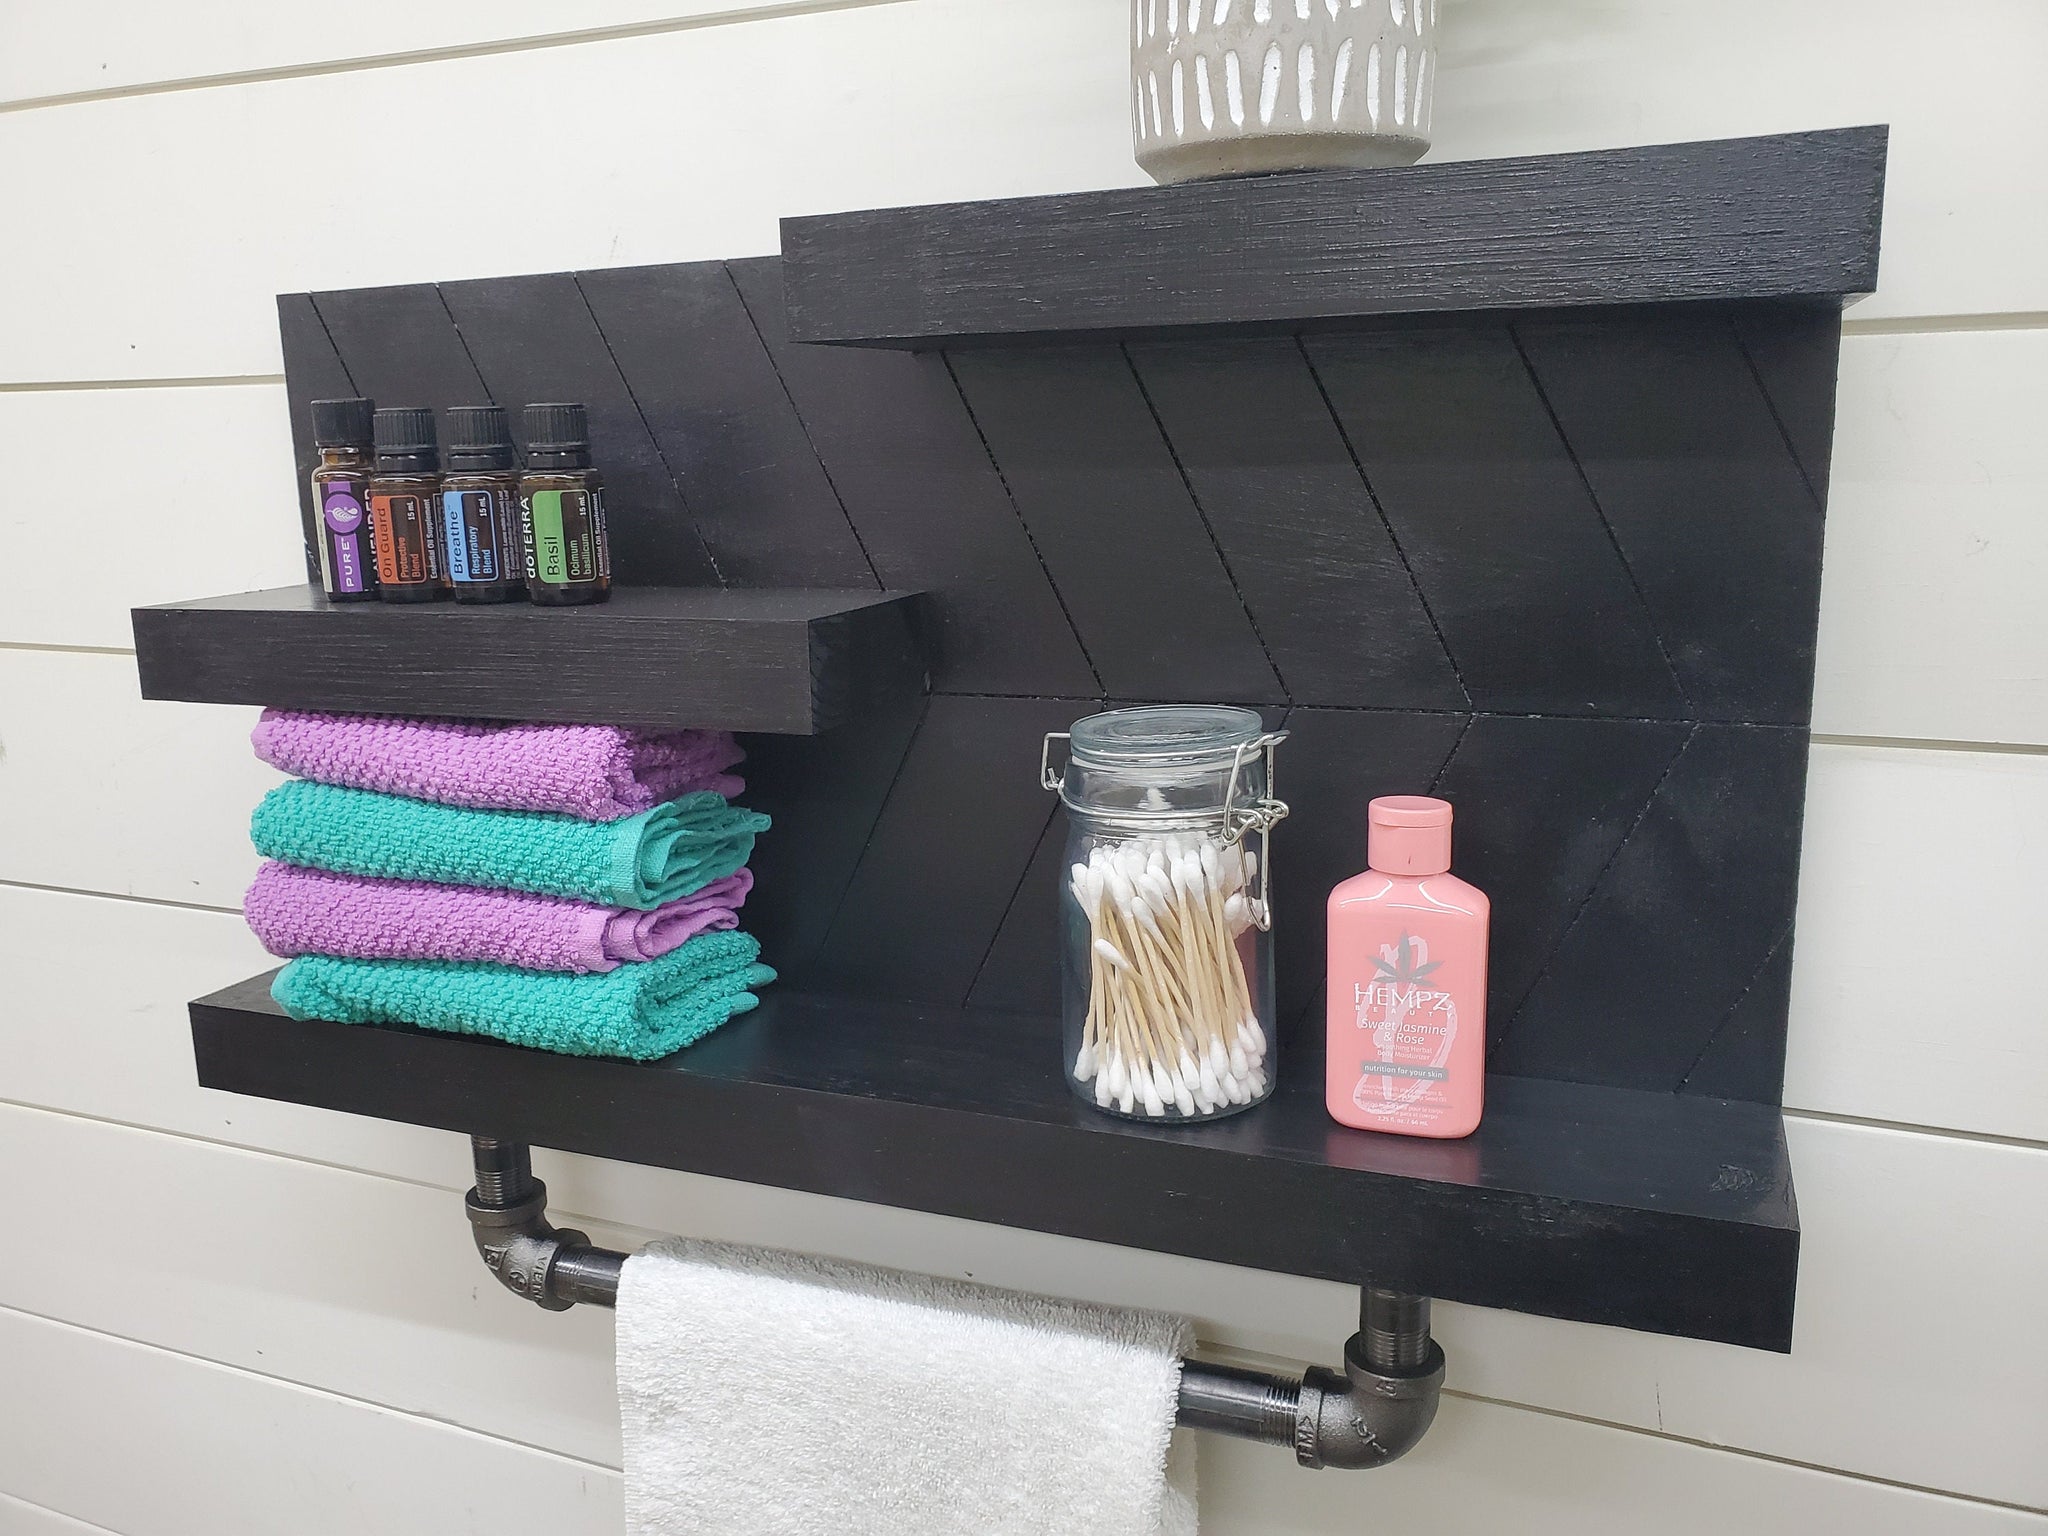 Bathroom Shelf Organizer With Towel Hooks, Farmhouse Country